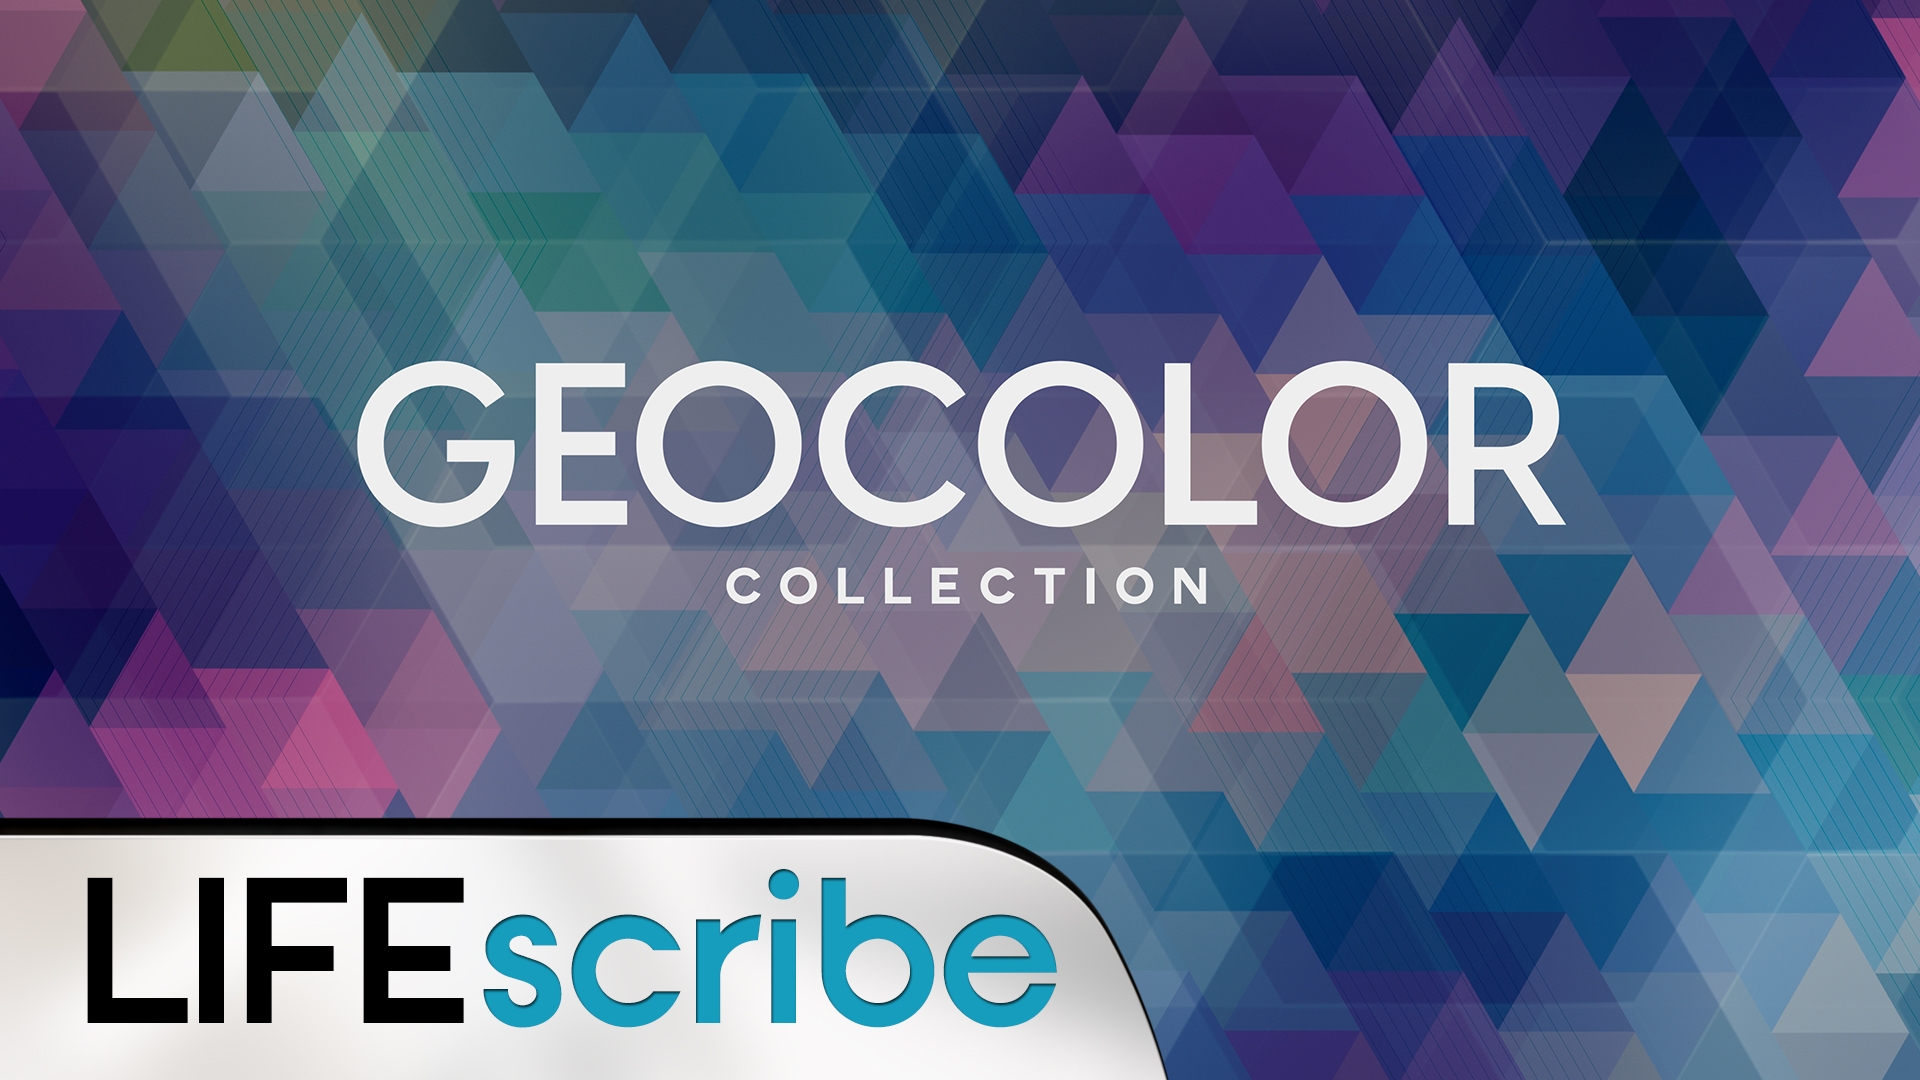 Geocolor Collection